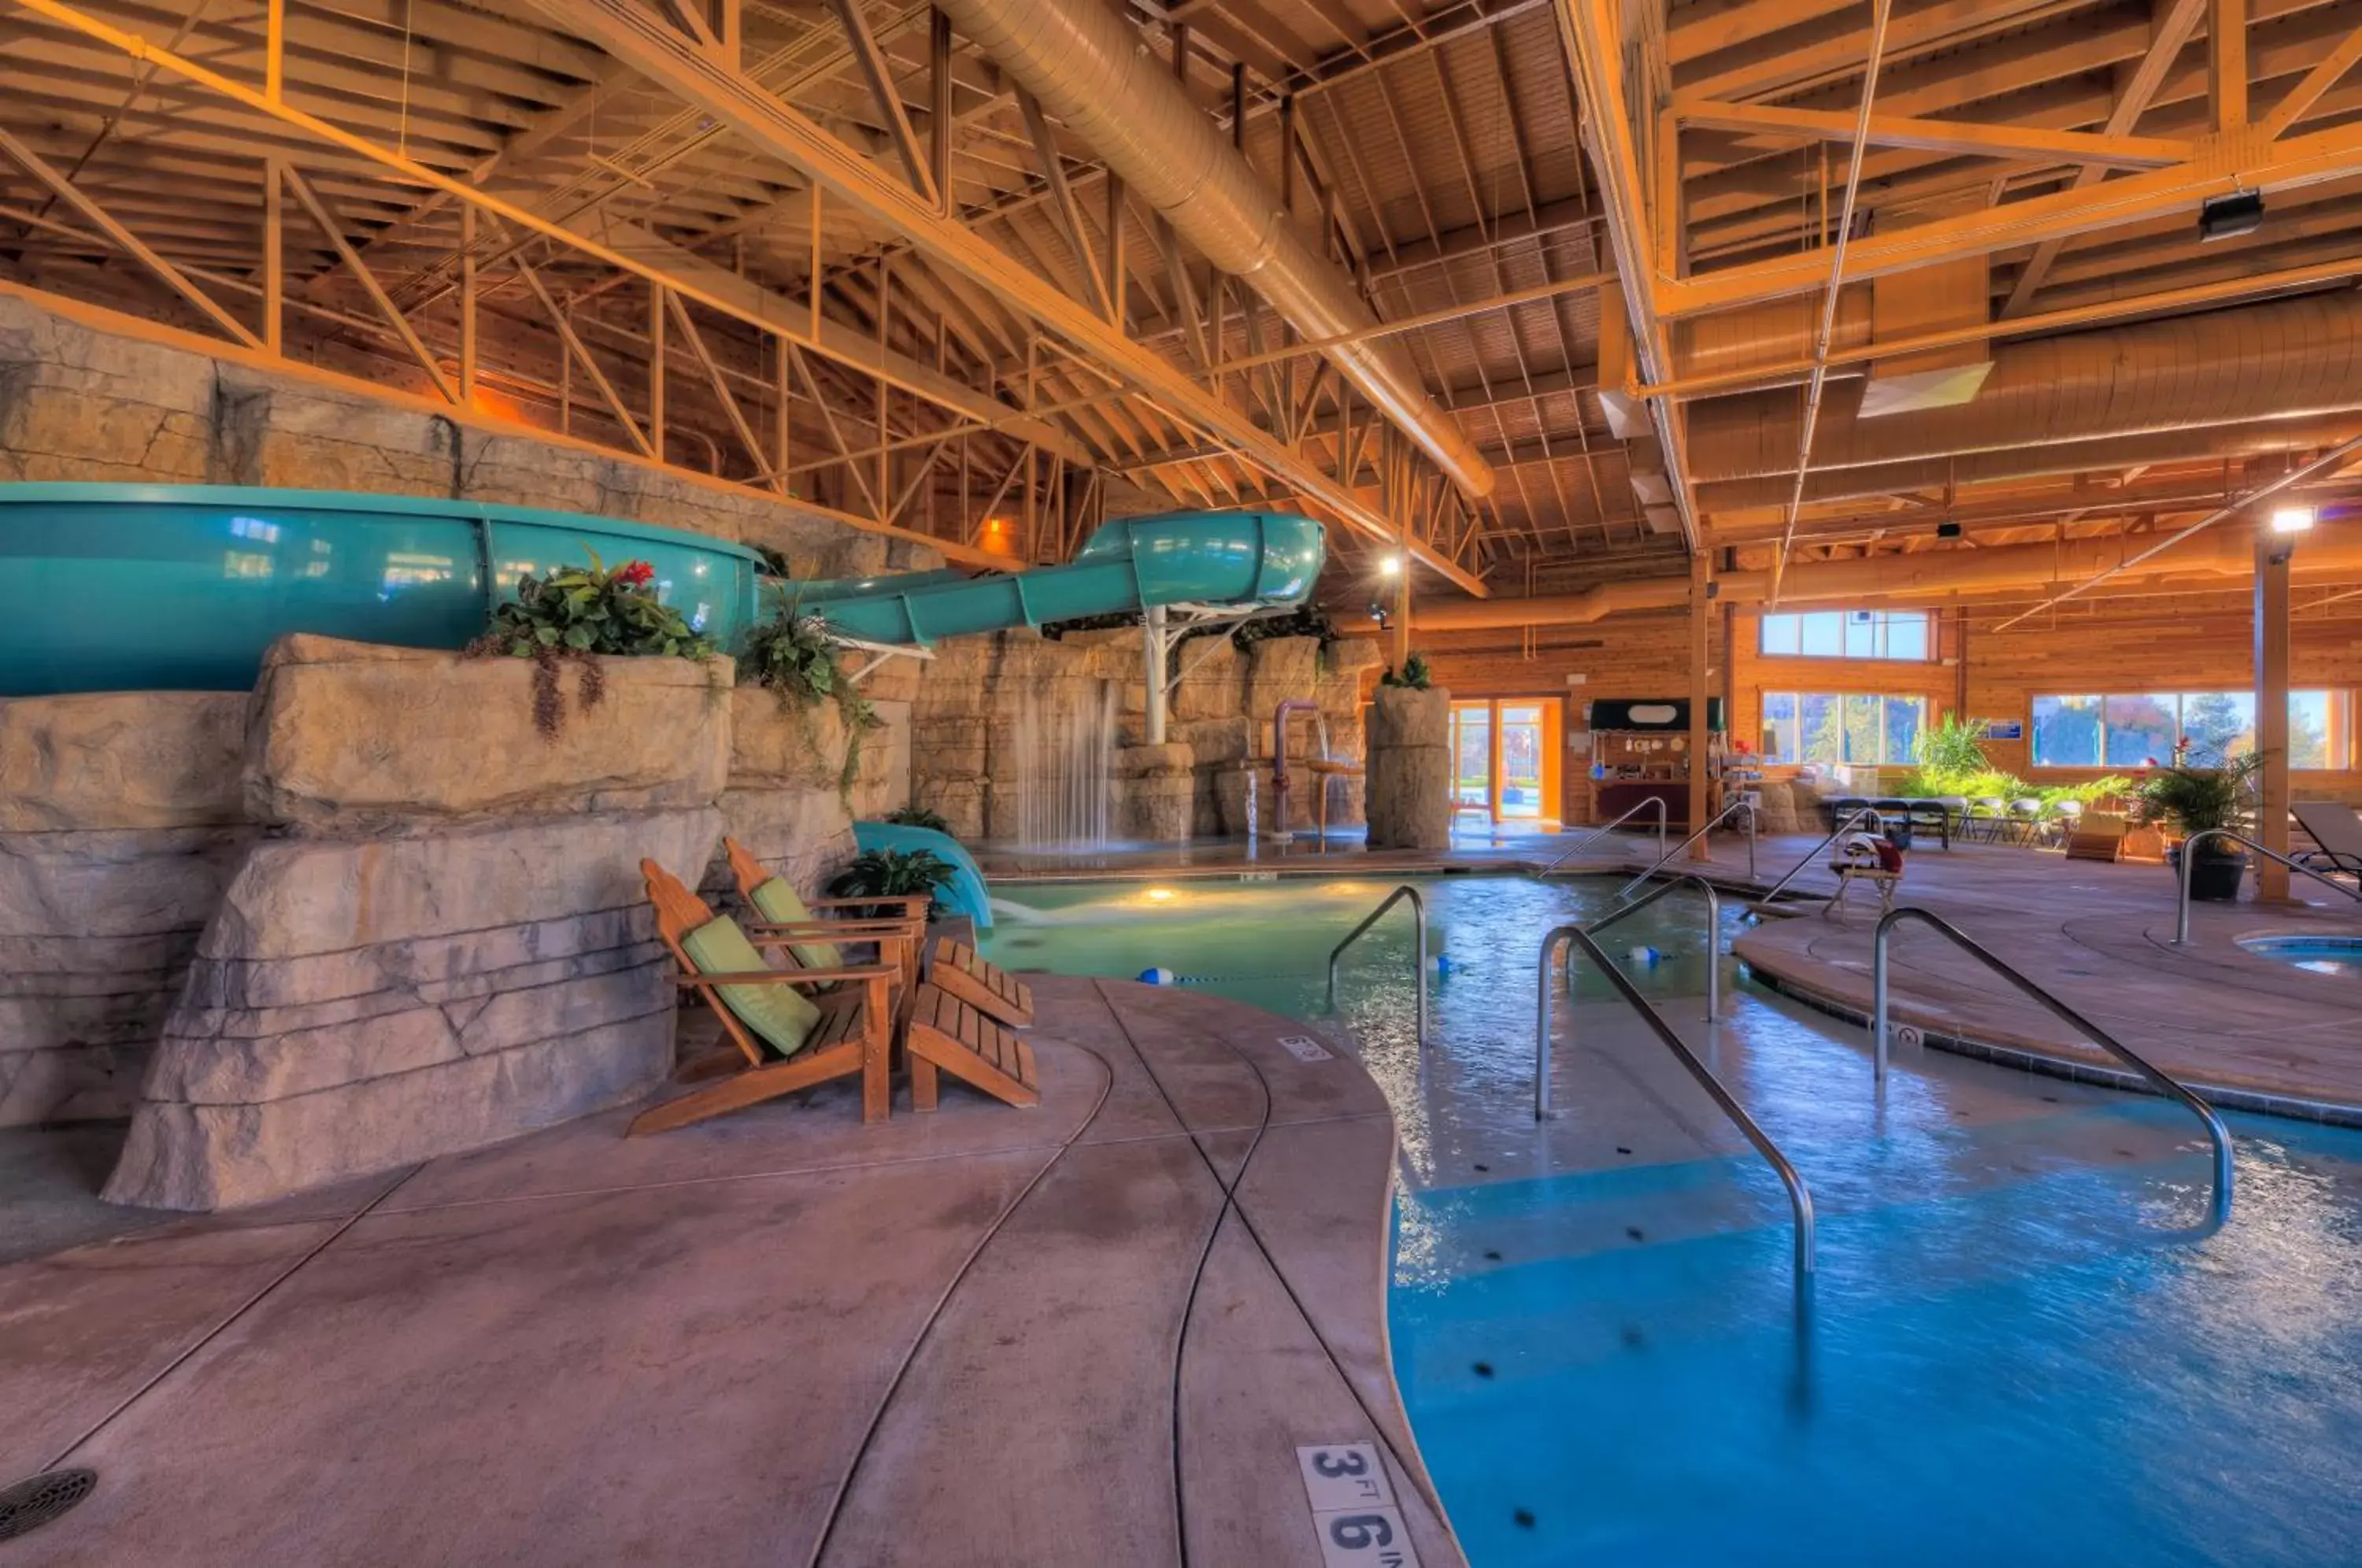 Swimming pool in Hyatt Vacation Club at The Lodges at Timber Ridge